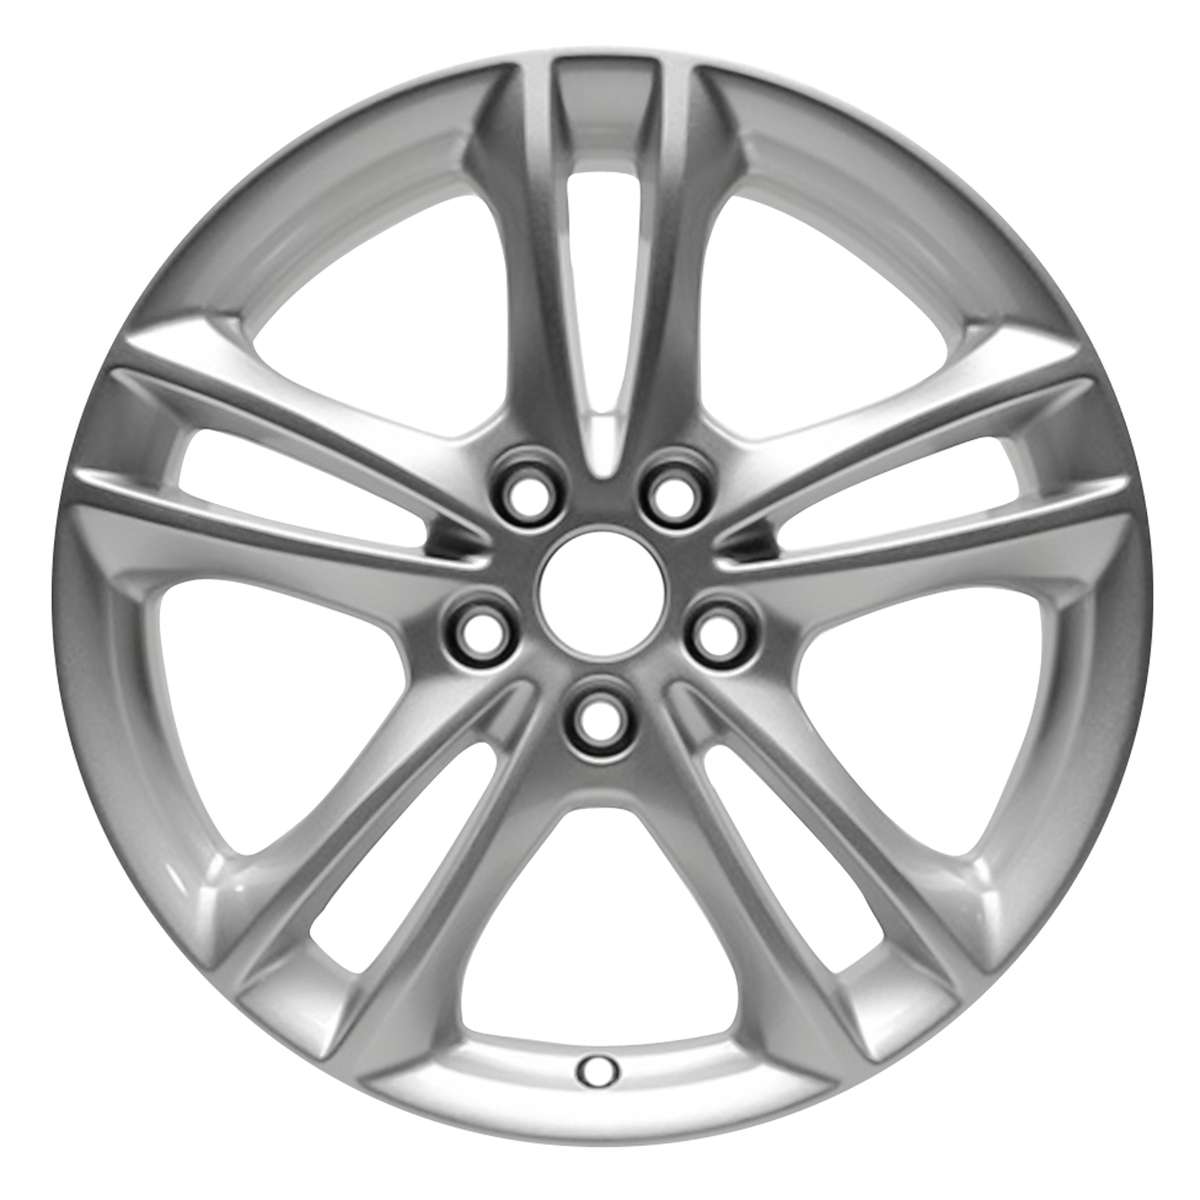 2019 Ford Fusion 17" OEM Wheel Rim W3984SB